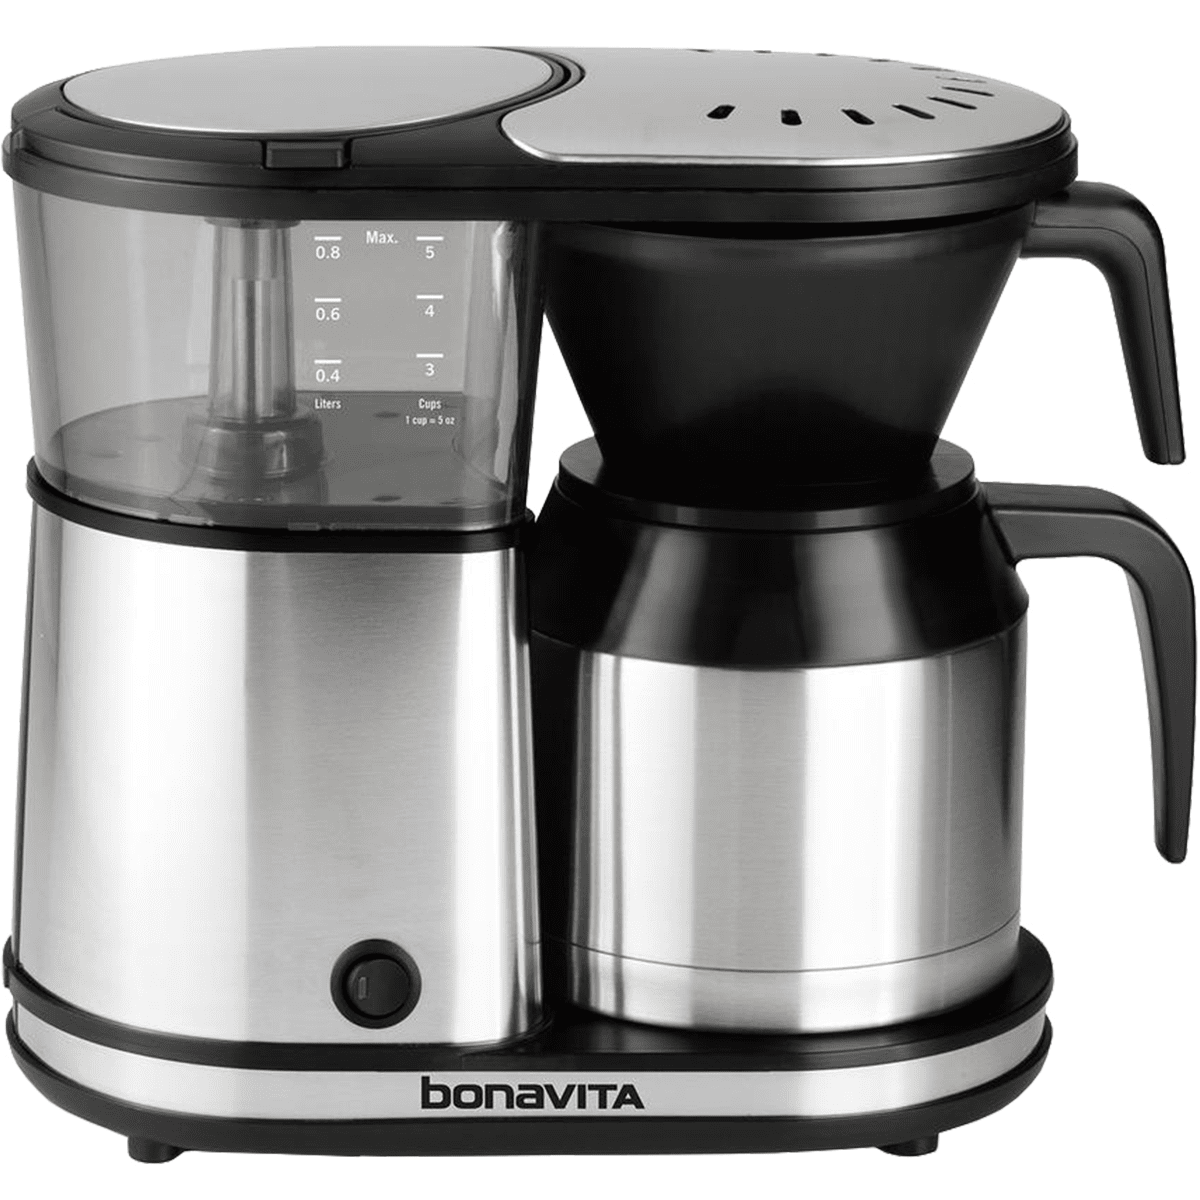 Bonavita 5-Cup Stainless Steel Carafe Coffee Maker (BV1500TS)